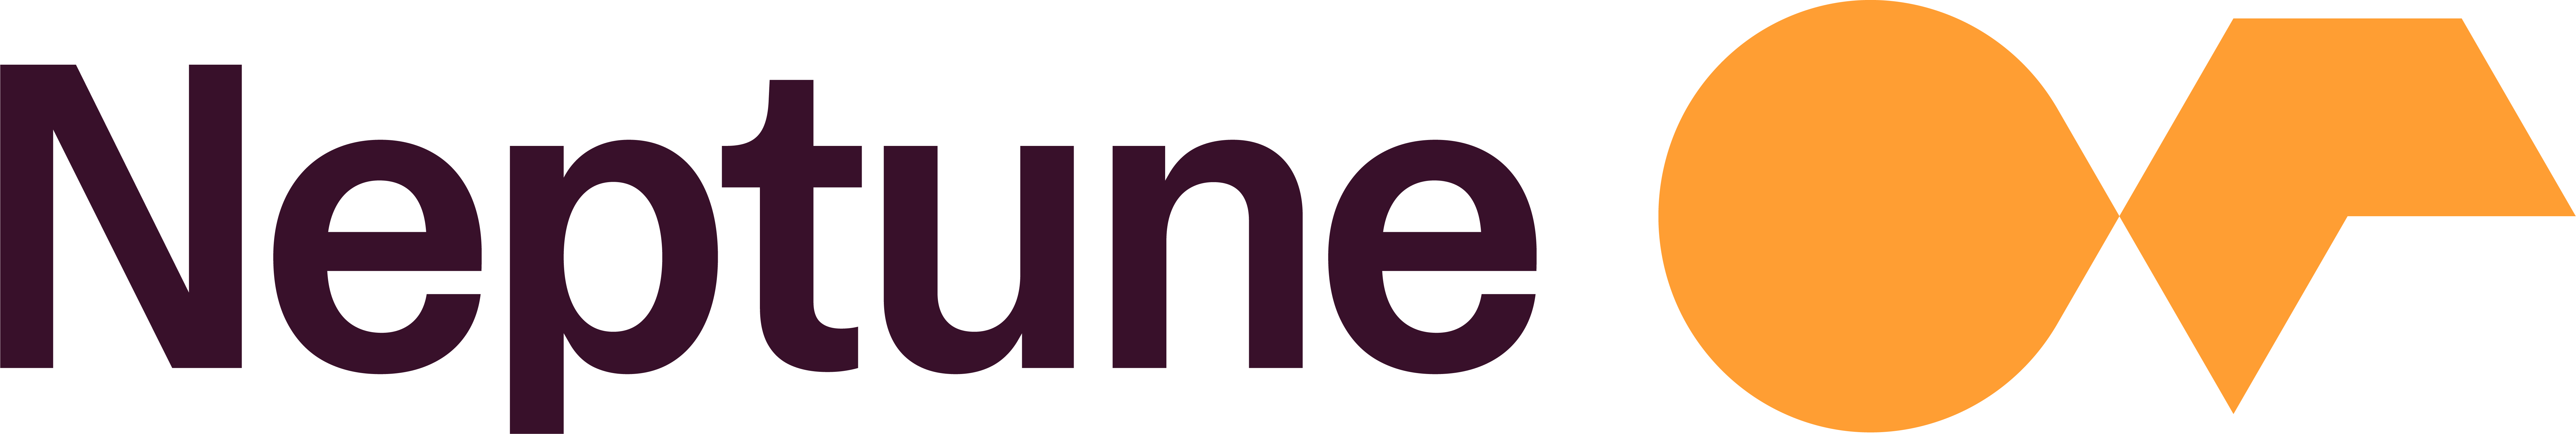 Neptune Software company logo